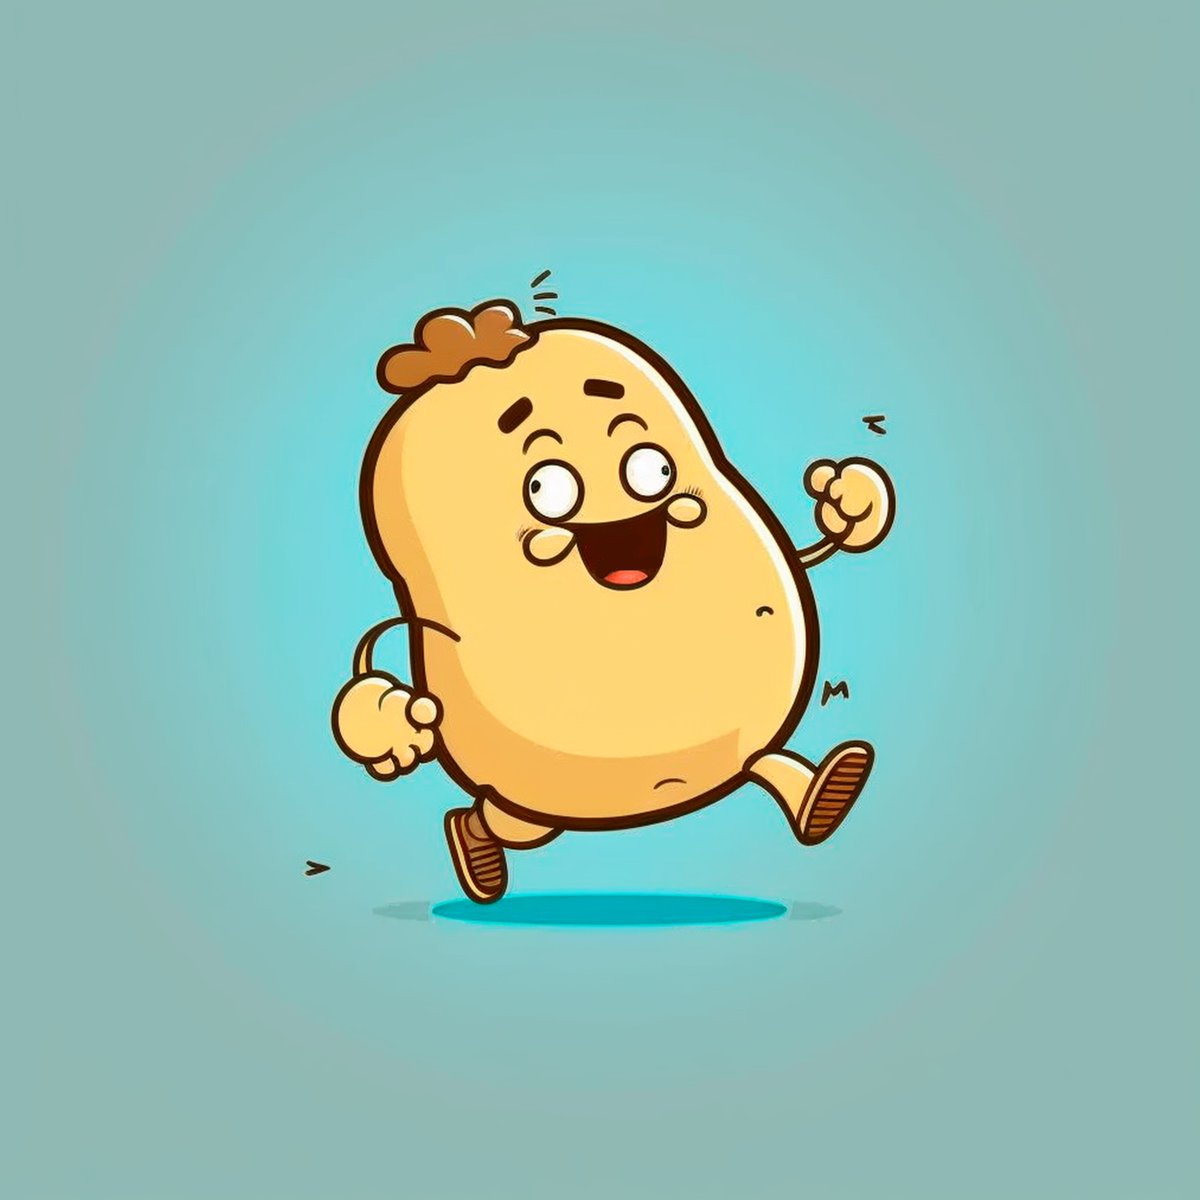 Funny Potato! 🥔❤
.
🛒 Available in: linktr.ee/lartoficial
.
#funnypotato #potato #vegetable #funnypotato #cartoon #cartoonpotato #cute #cutepotato #potatovegetable #food #funny #happy #vegetableart #potatoart #art #drawing #illustration #digitalart #redbubble #teepublic